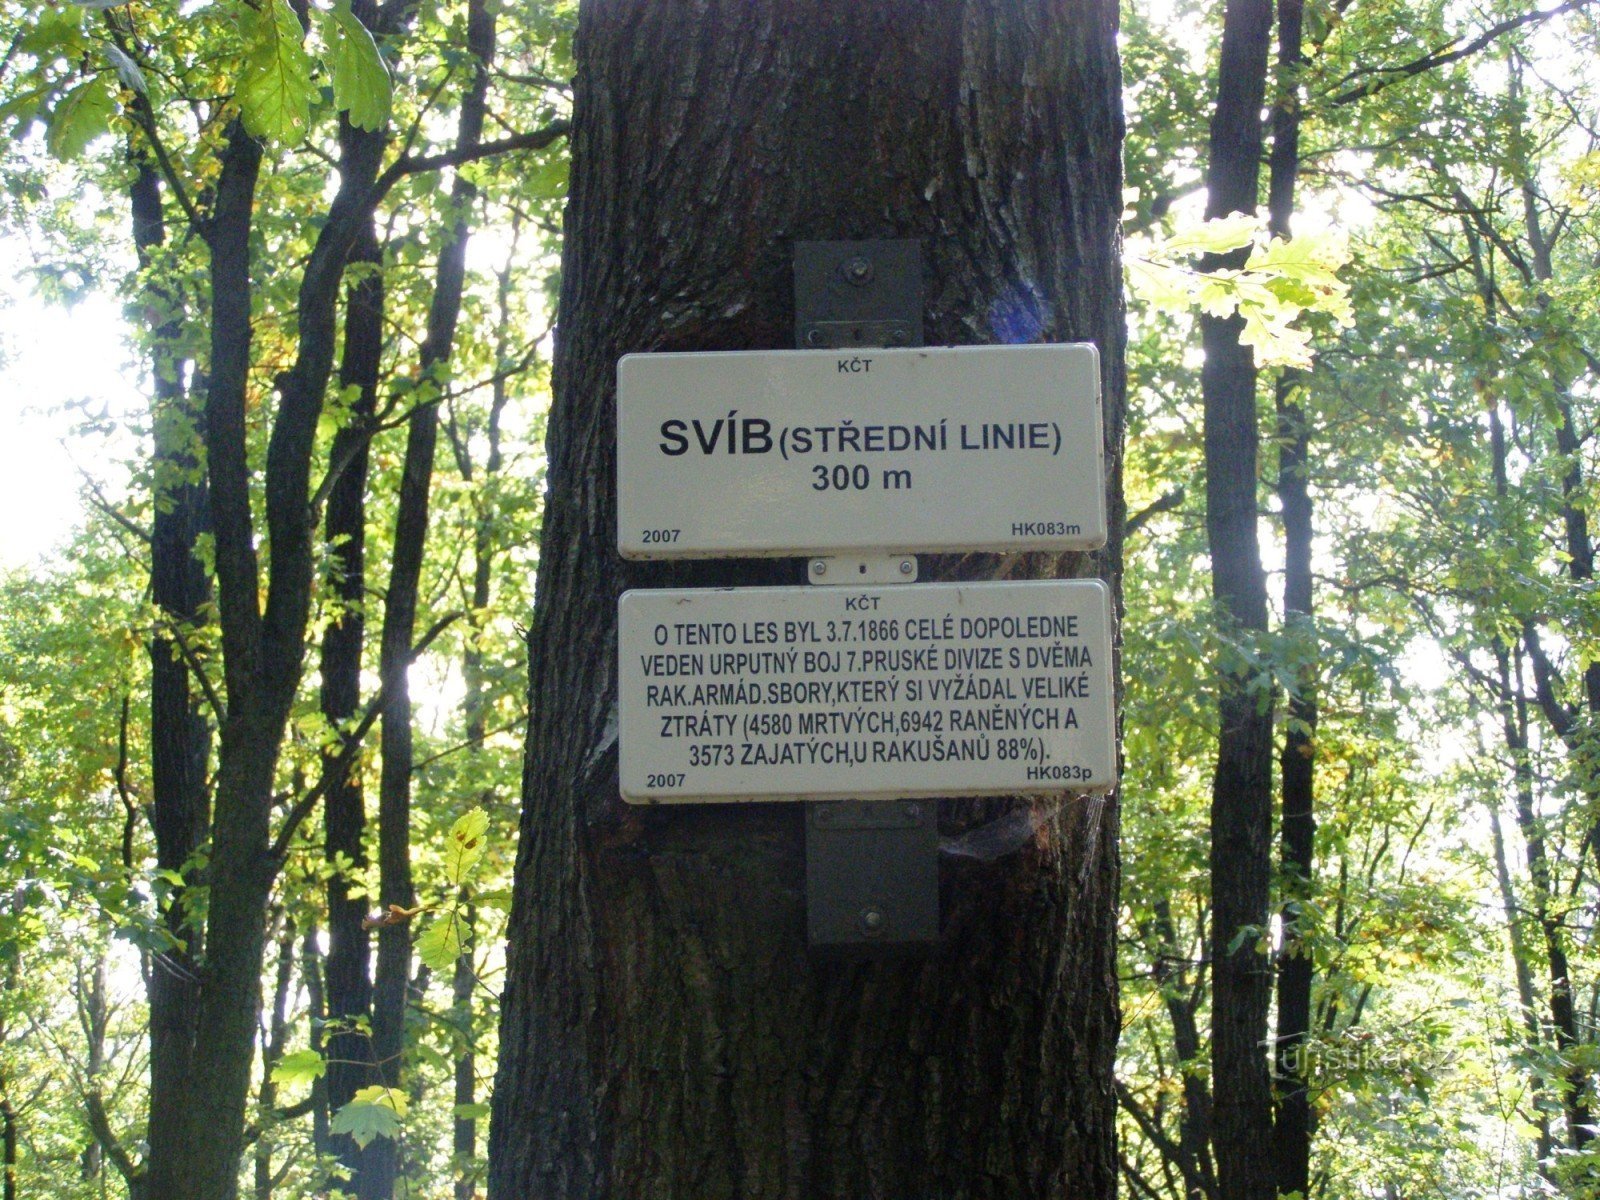 Les Svíb - srednja linija